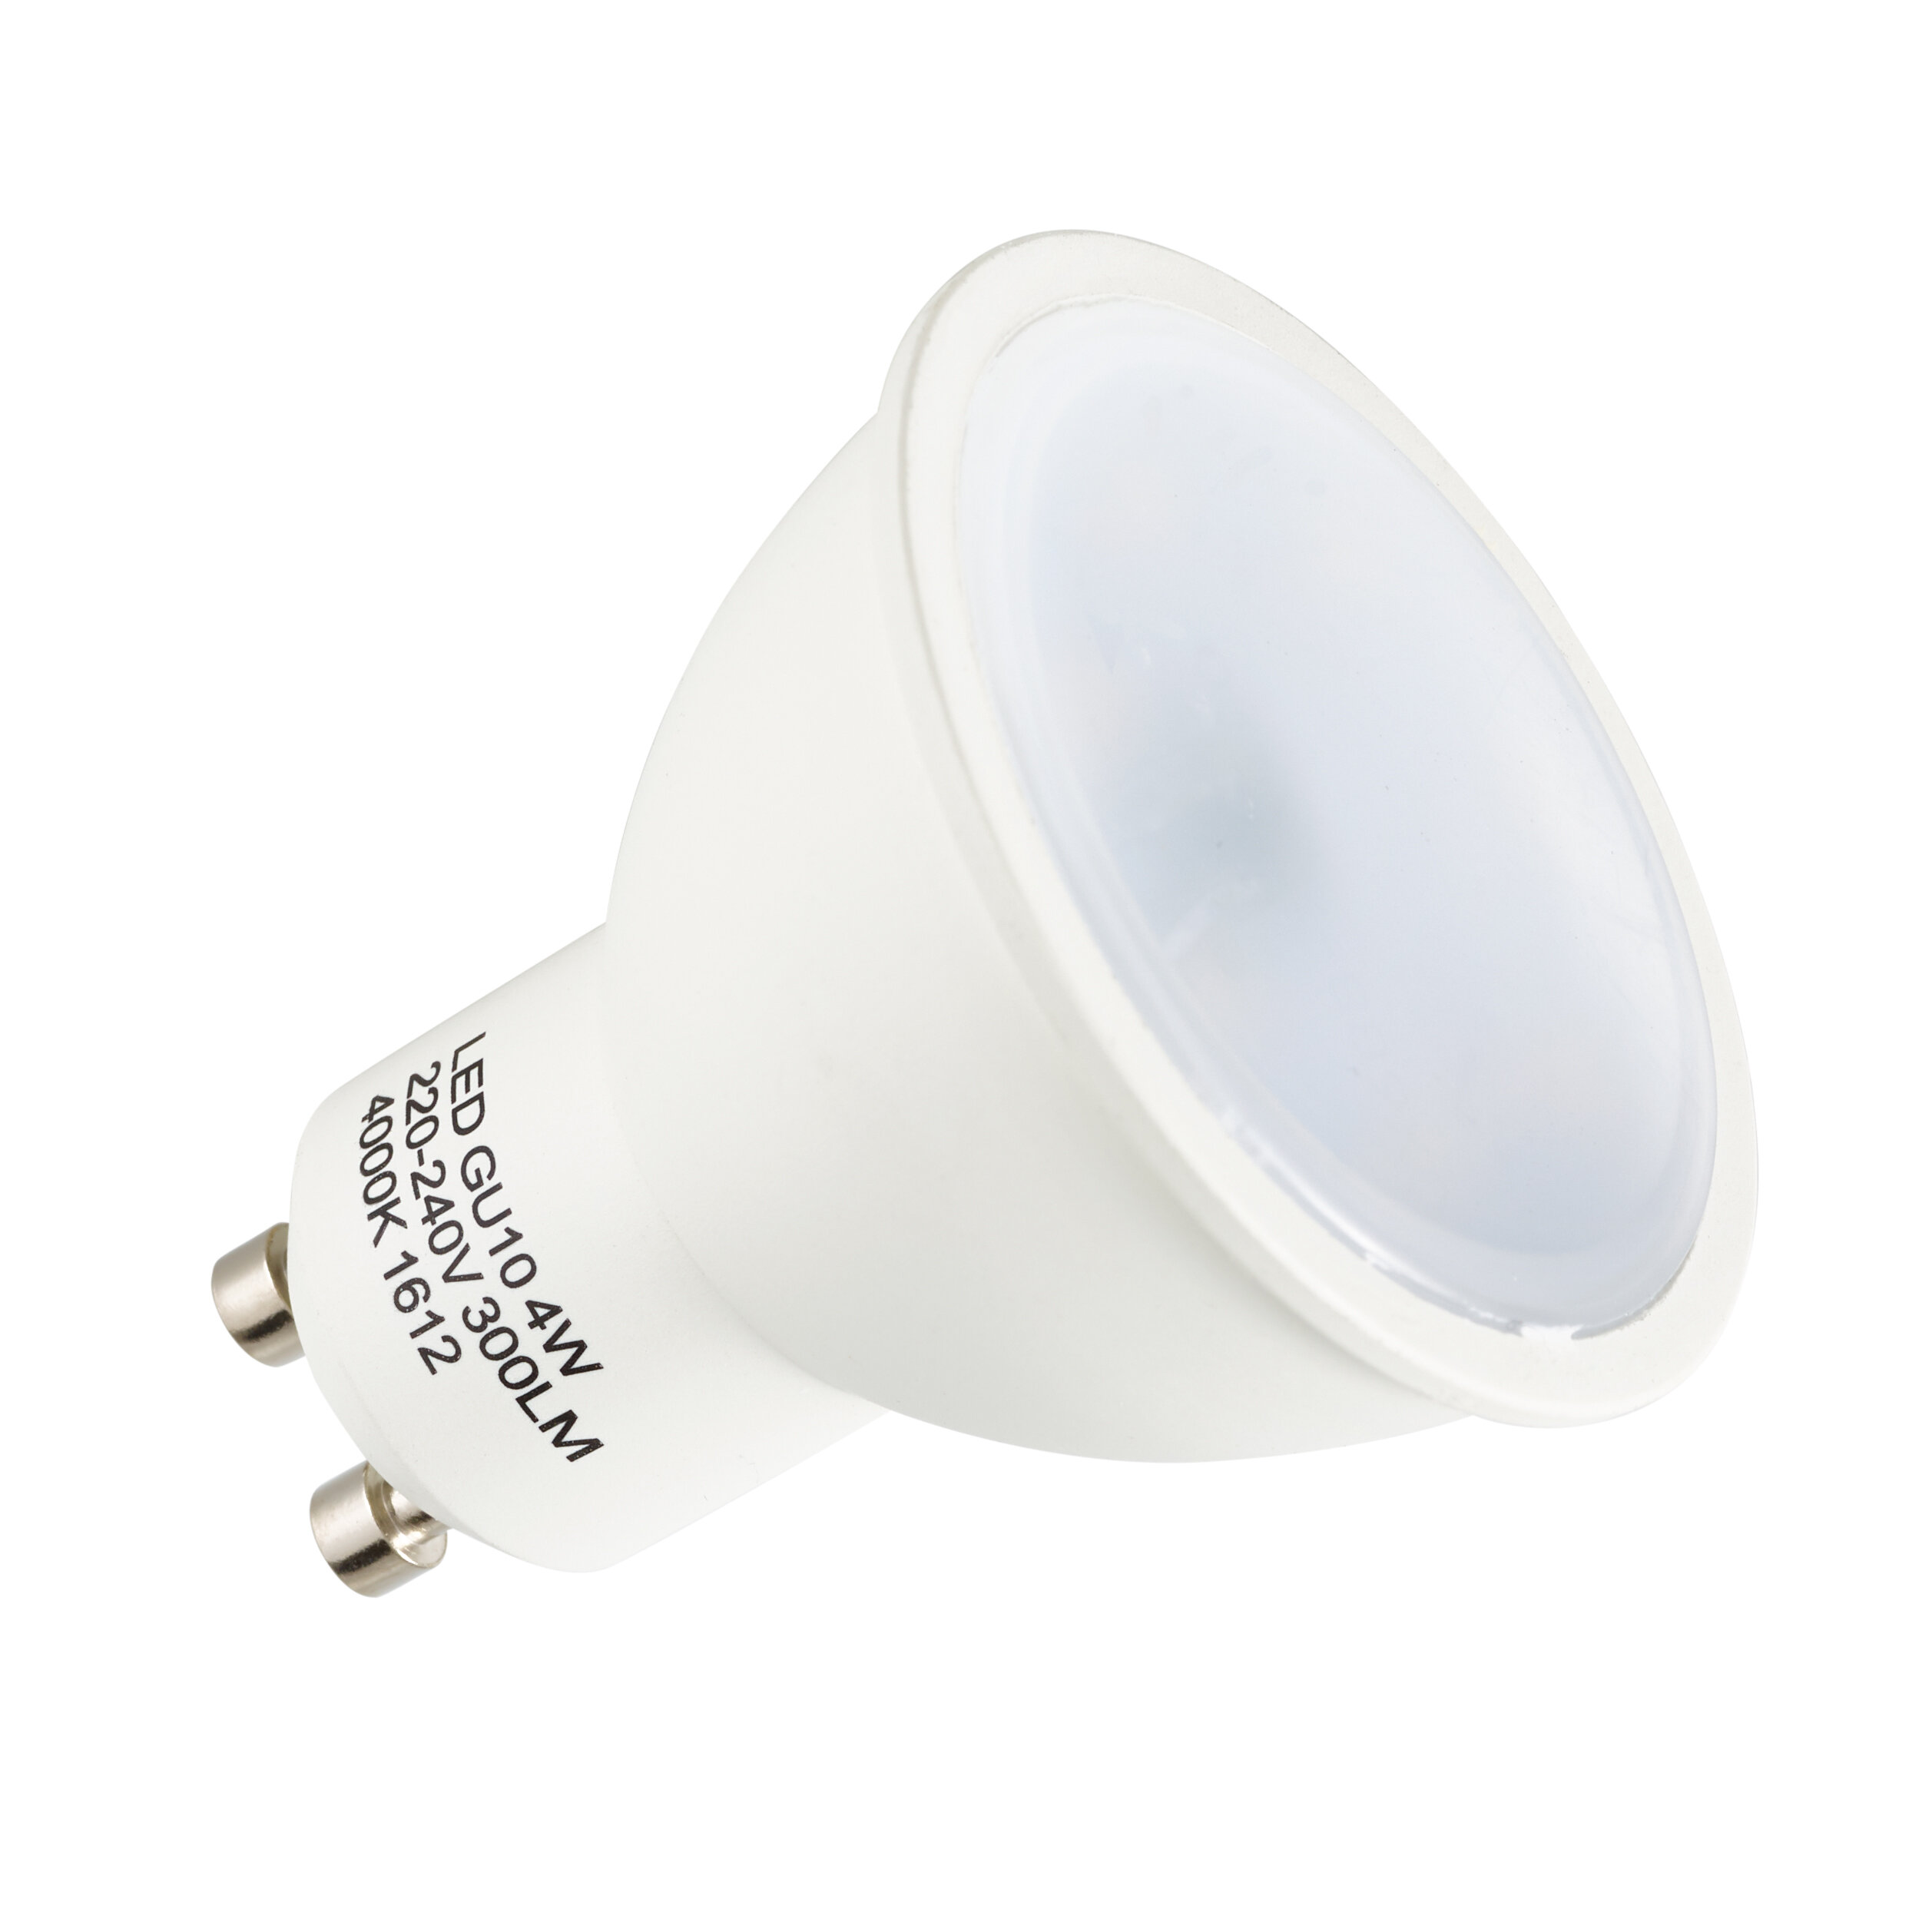 10x GU10 4W = 28W LED Bulb Spotlight COB Light Downlights Cool White Light 5300K 